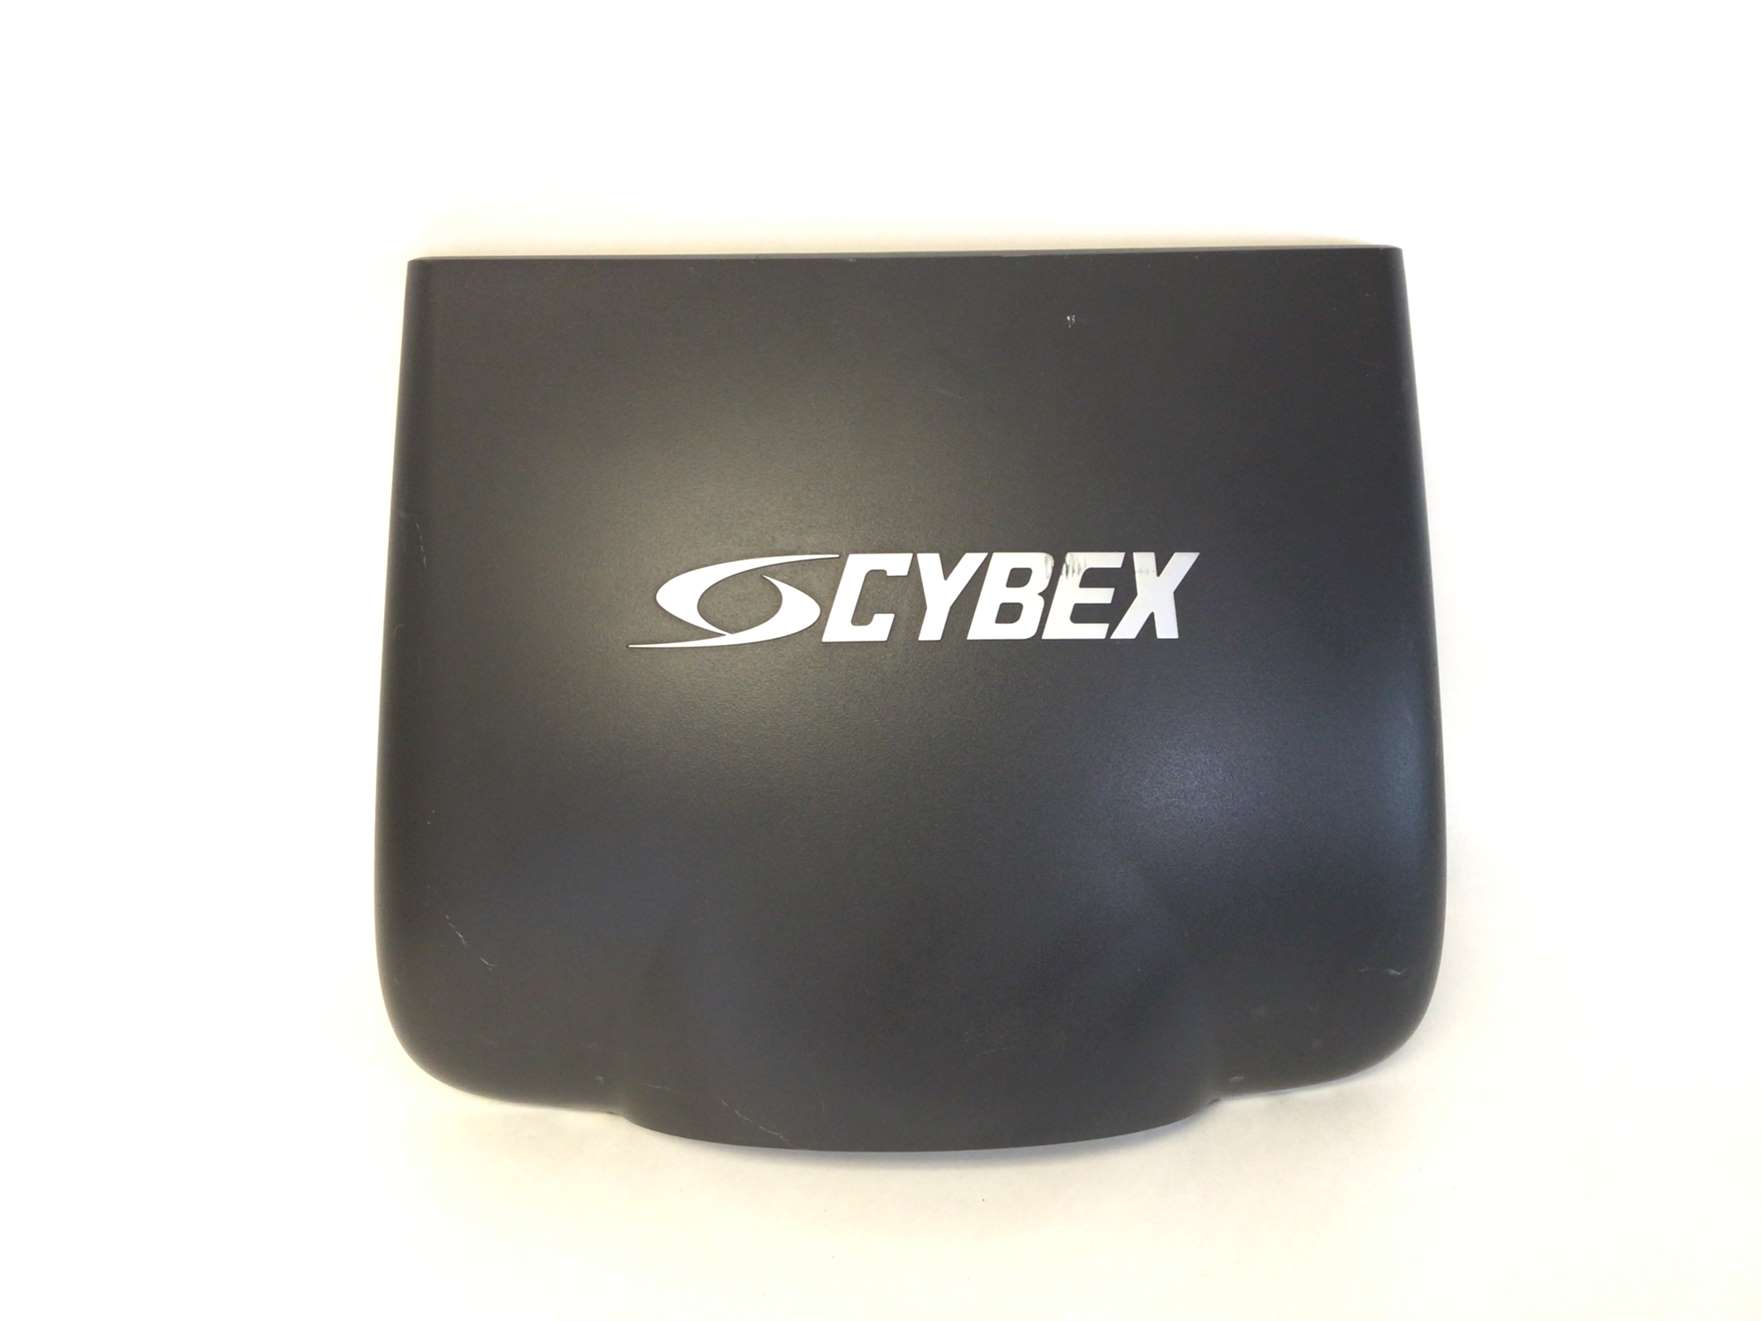 Cybex AV Console Back PVS TV (Used)